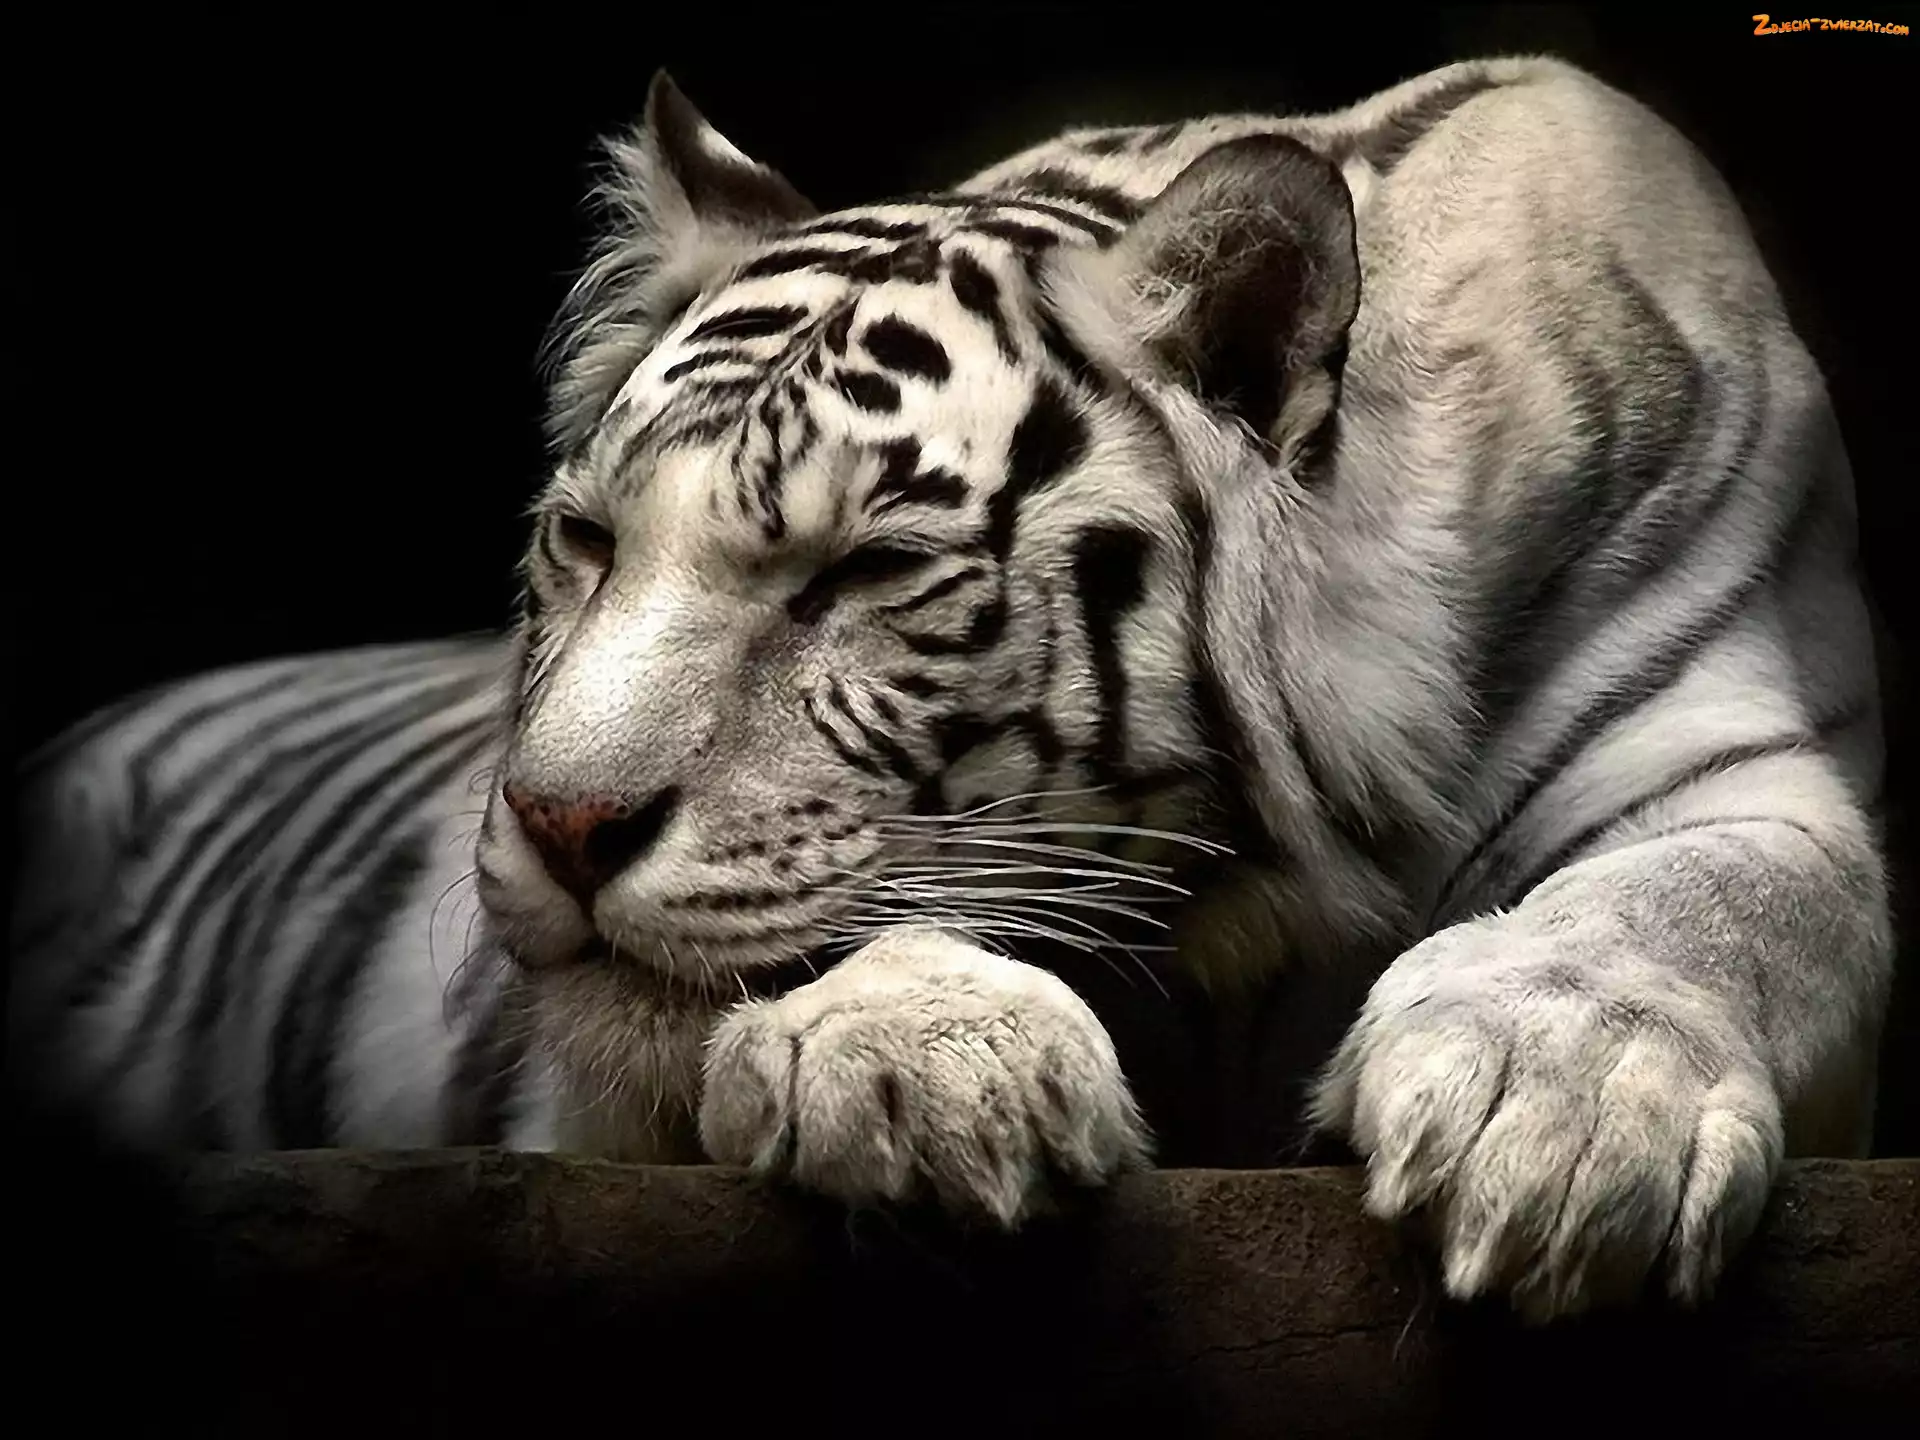 Tygrys, Bengalski